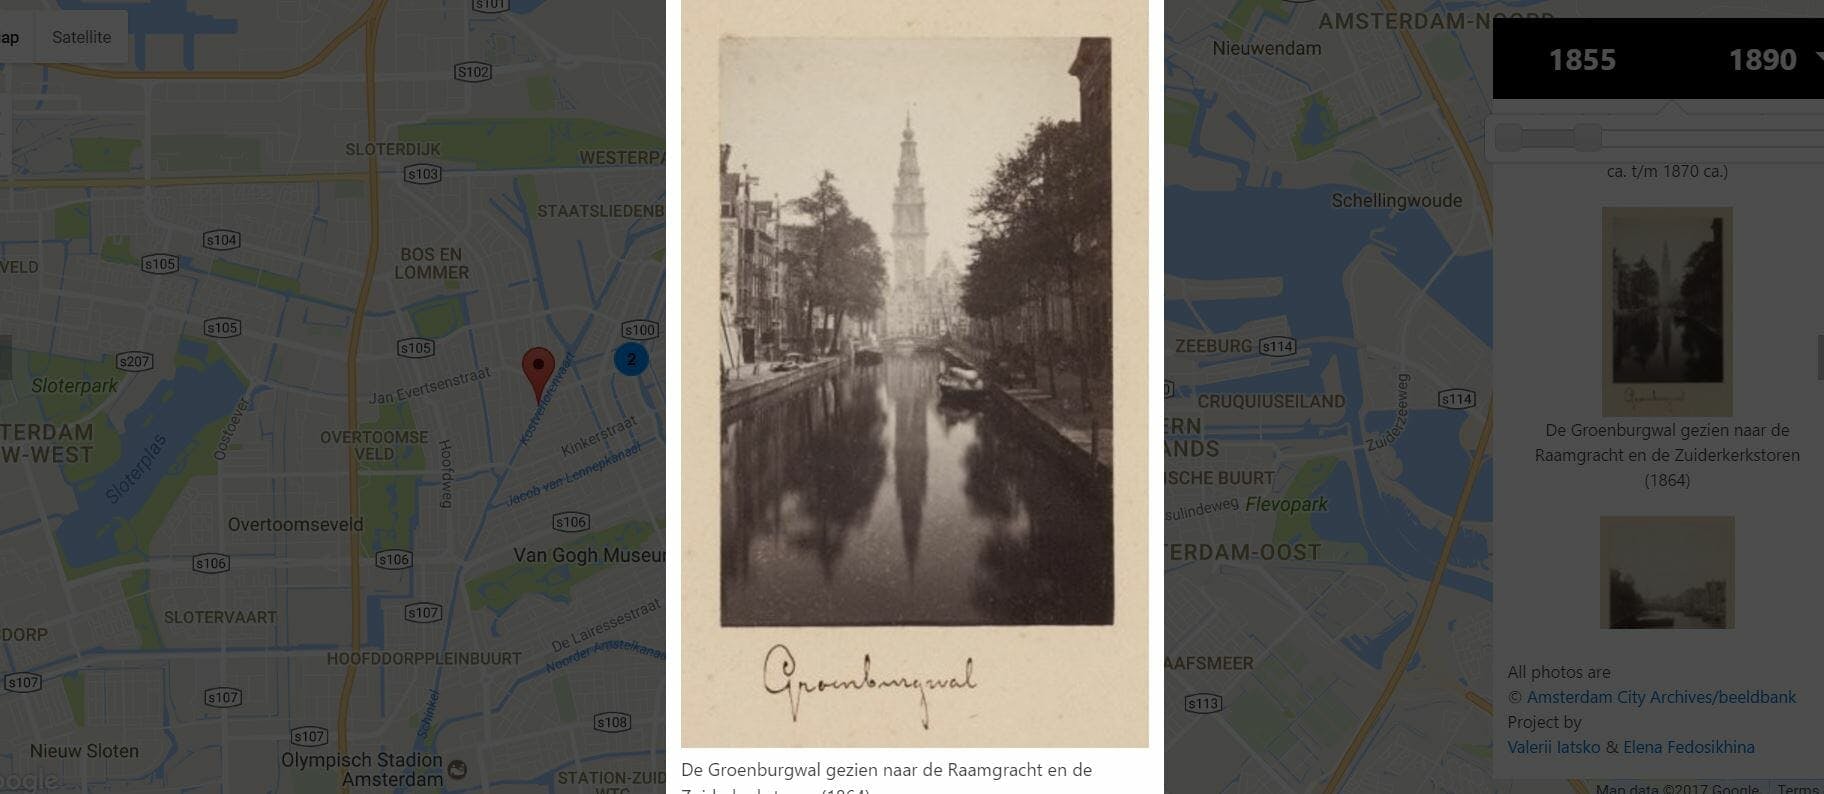 amsterdam city archive history visualization photo